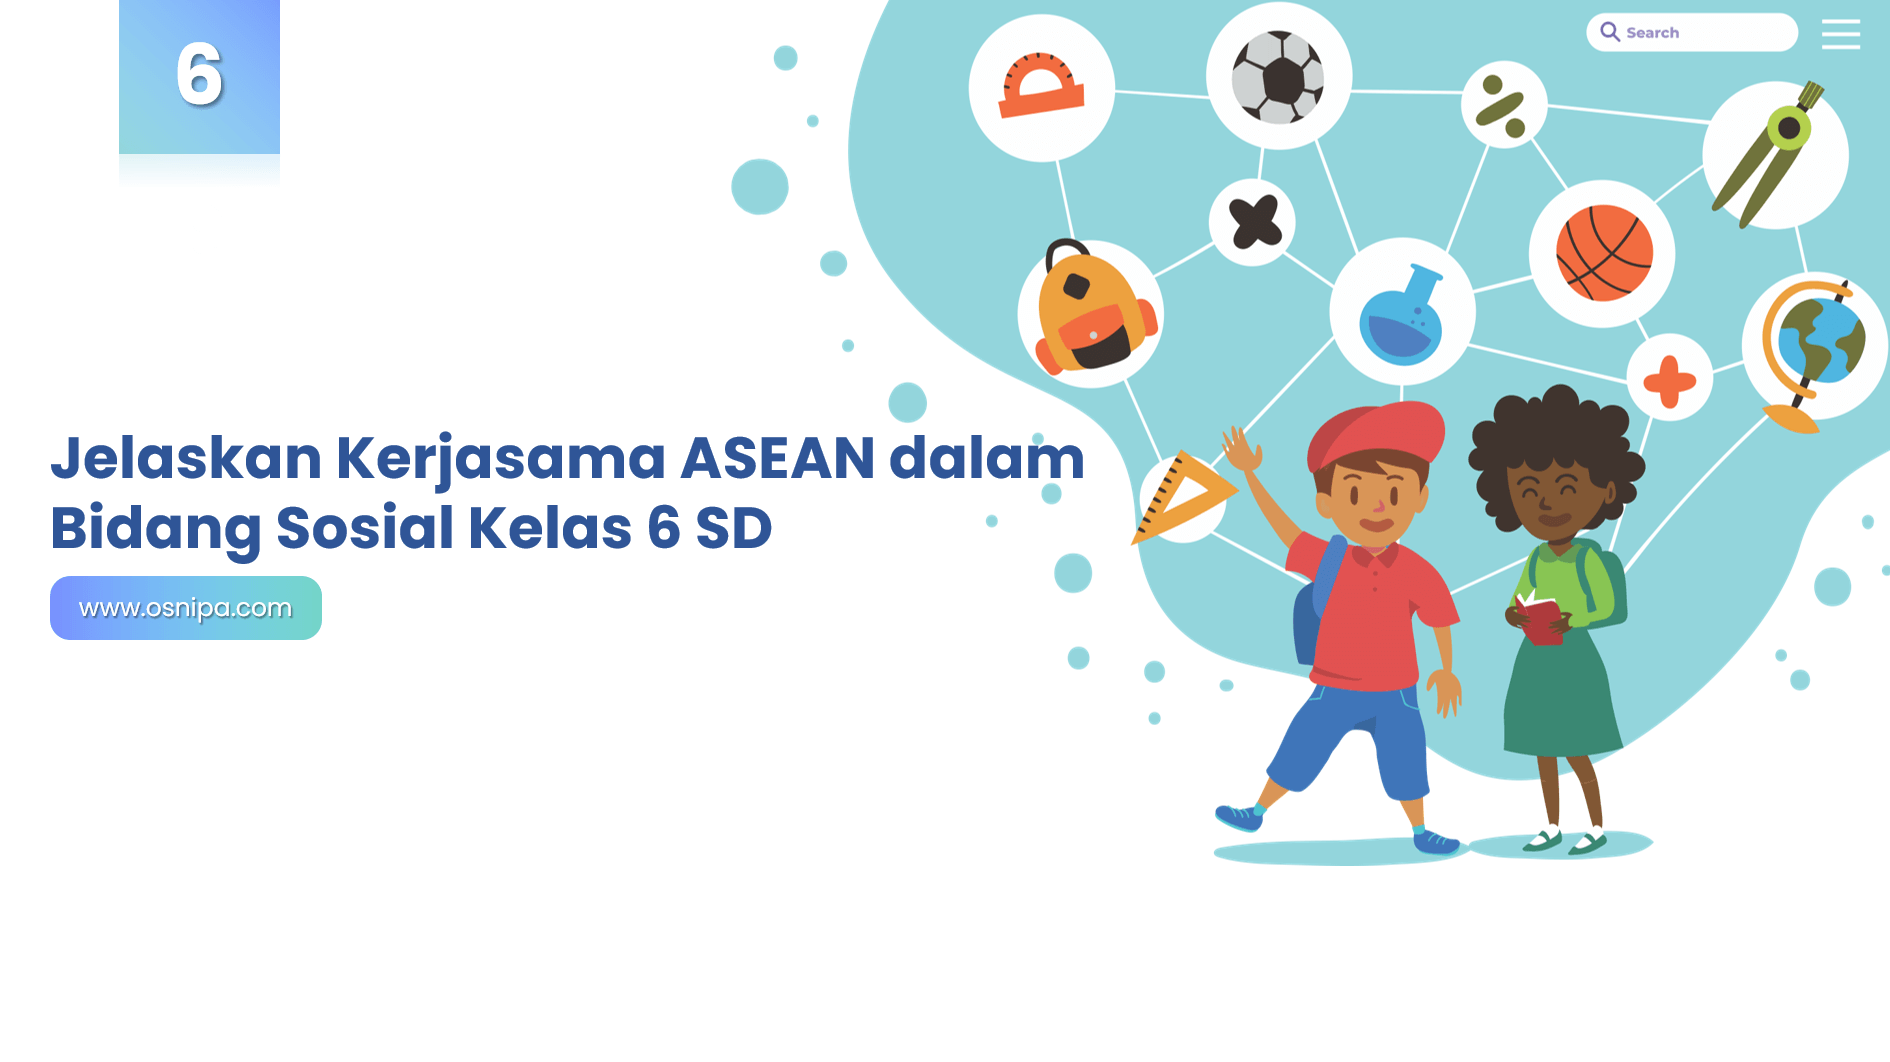 Jelaskan Kerjasama ASEAN dalam Bidang Sosial Kelas 6 SD